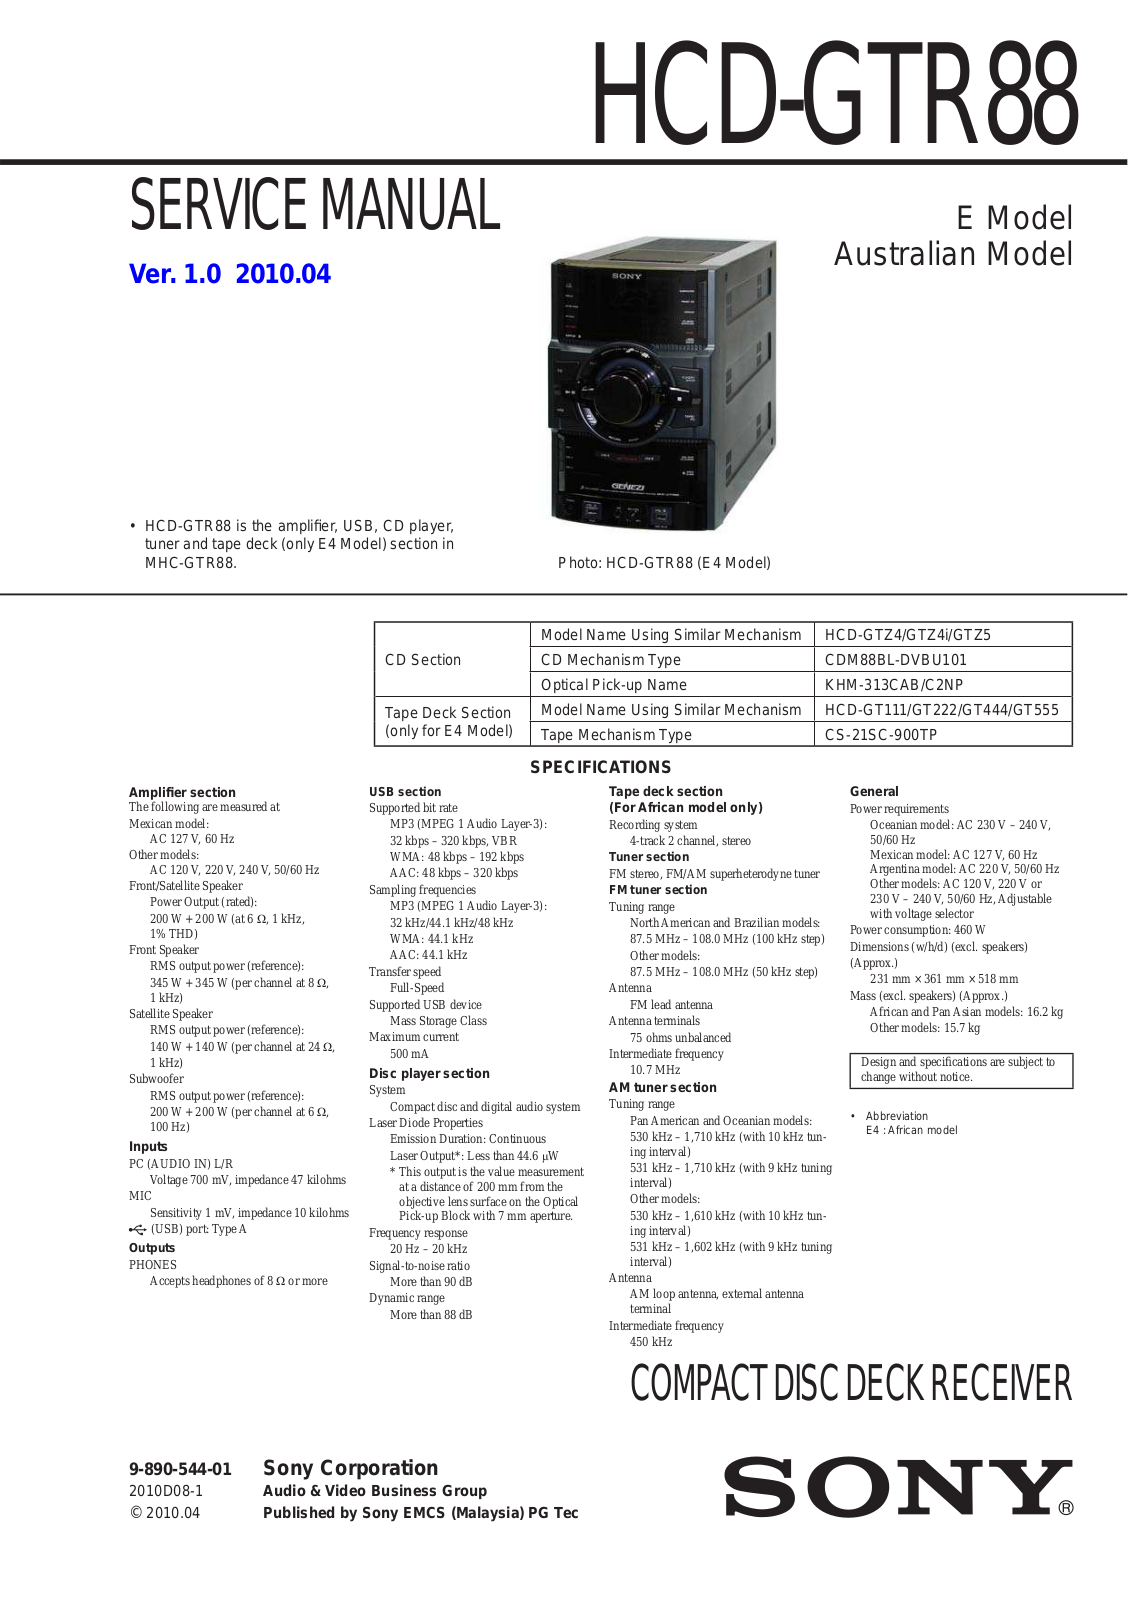 Sony HCD-GTR88 Service Manual